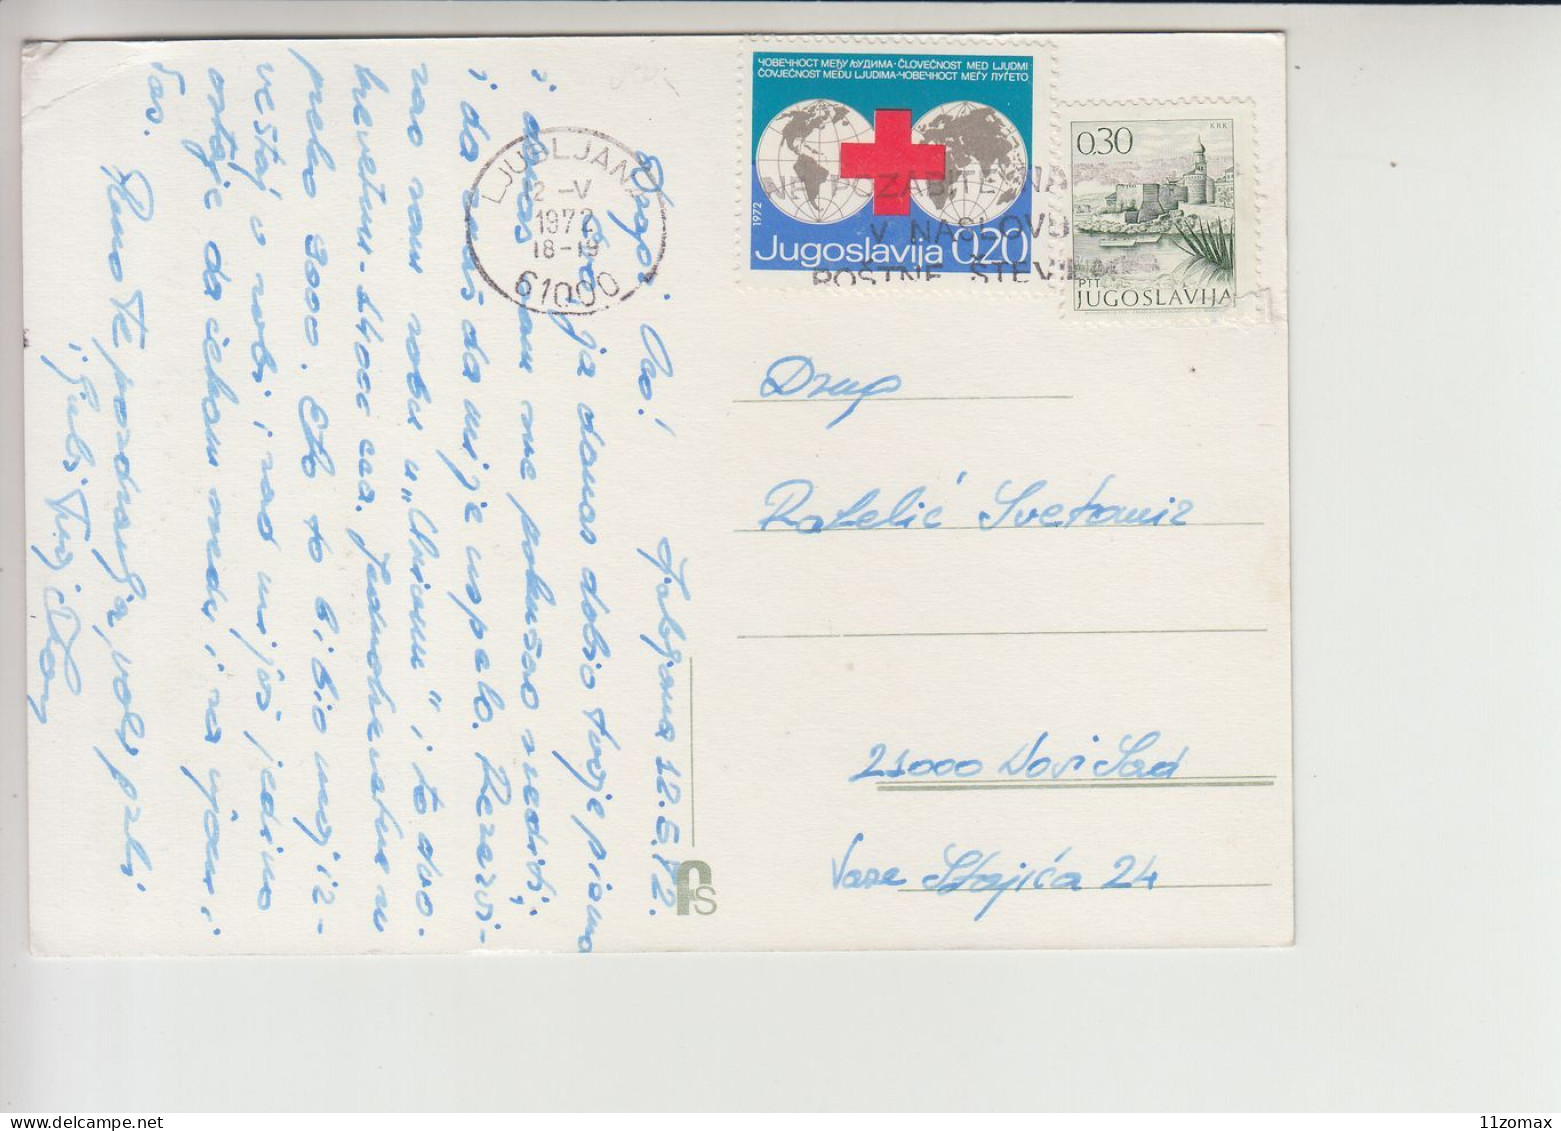 Ljubljana Cancelation Red Cross Surcharge 1972 (sl012) Slovenia - Briefe U. Dokumente